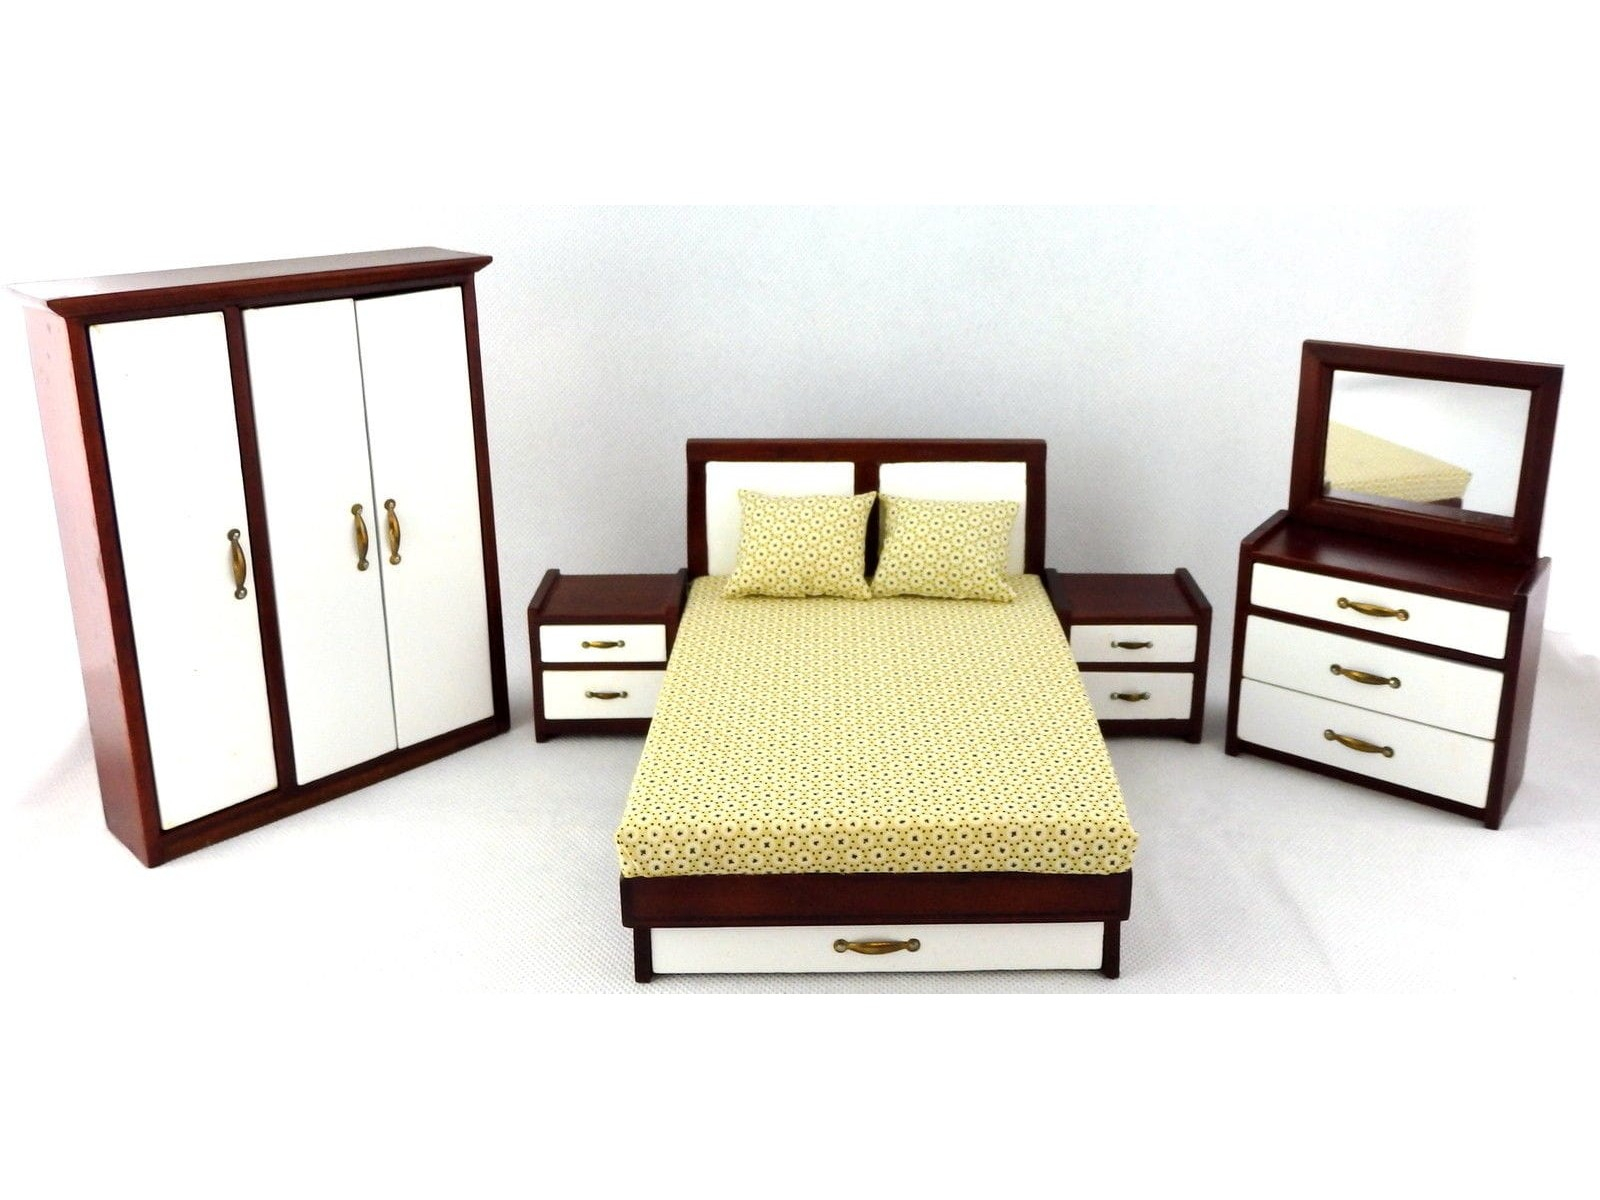 bity bedroom furniture set